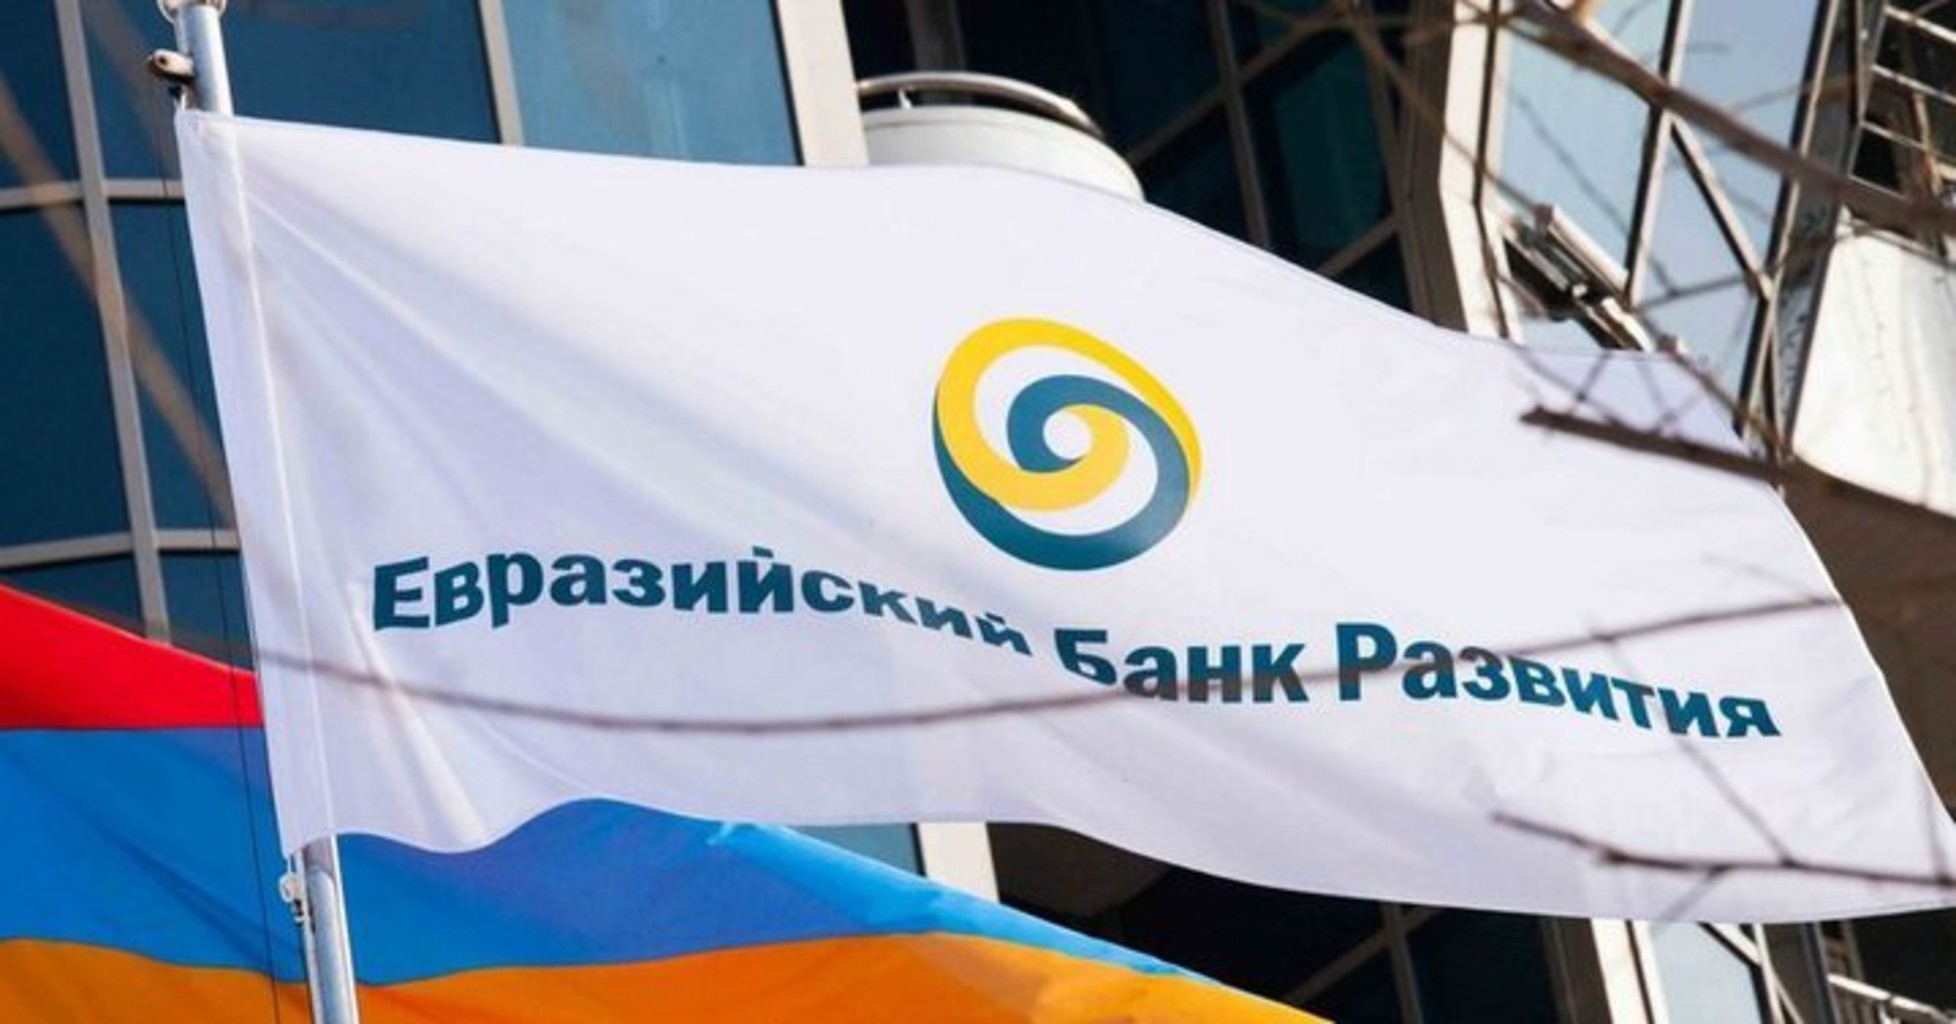 ЕАБР оформил сделку по выкупу облигаций АО "Батыс Транзит" на сумму 11,57 млрд тенге